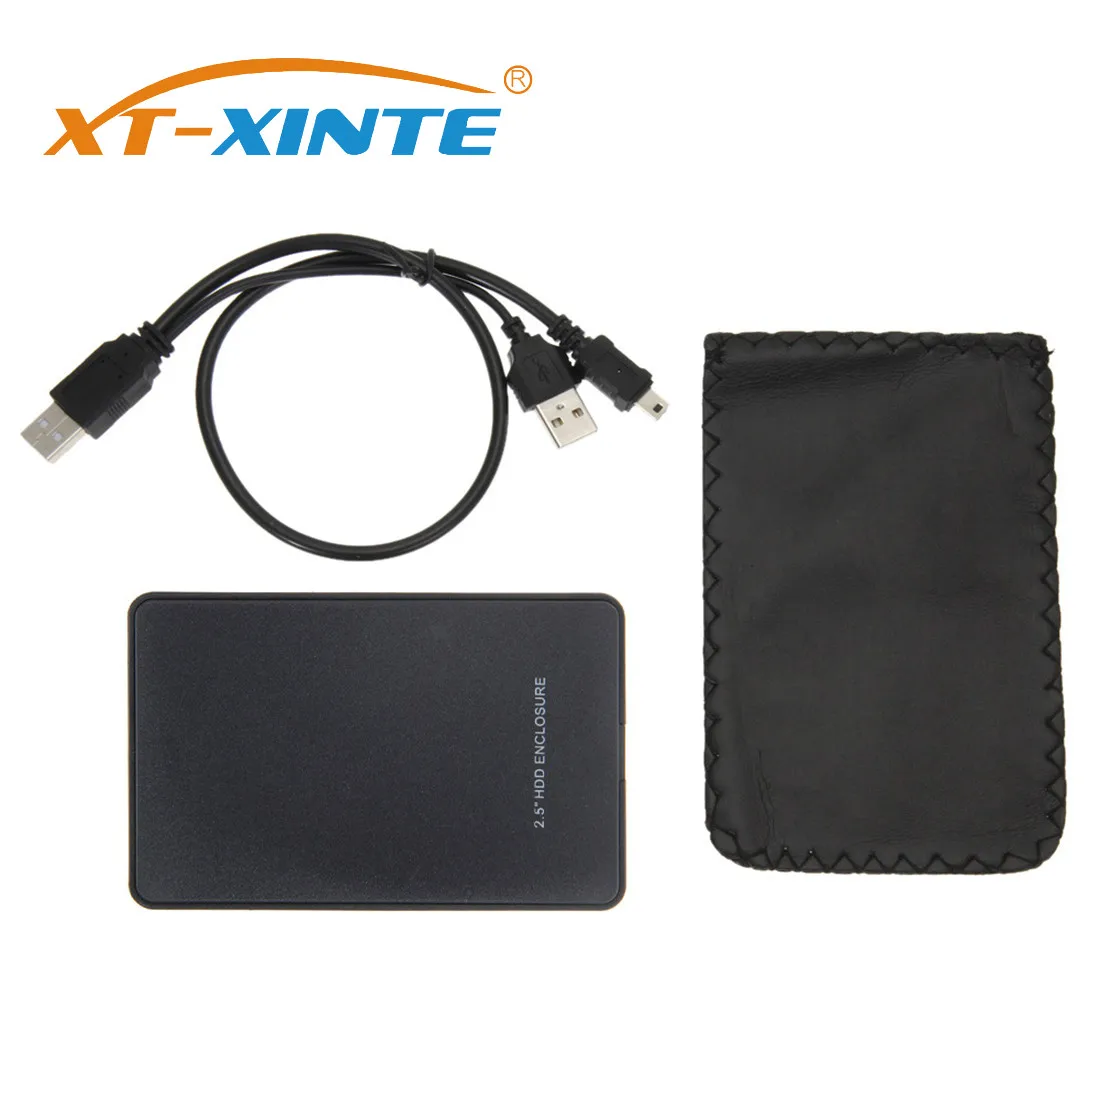 

XT-XINTE 2.5 inch USB 2.0 SATA HDD Box Mobile SSD Hard Drive External Enclosure Case Support 2TB Data Transfer Backup Tool